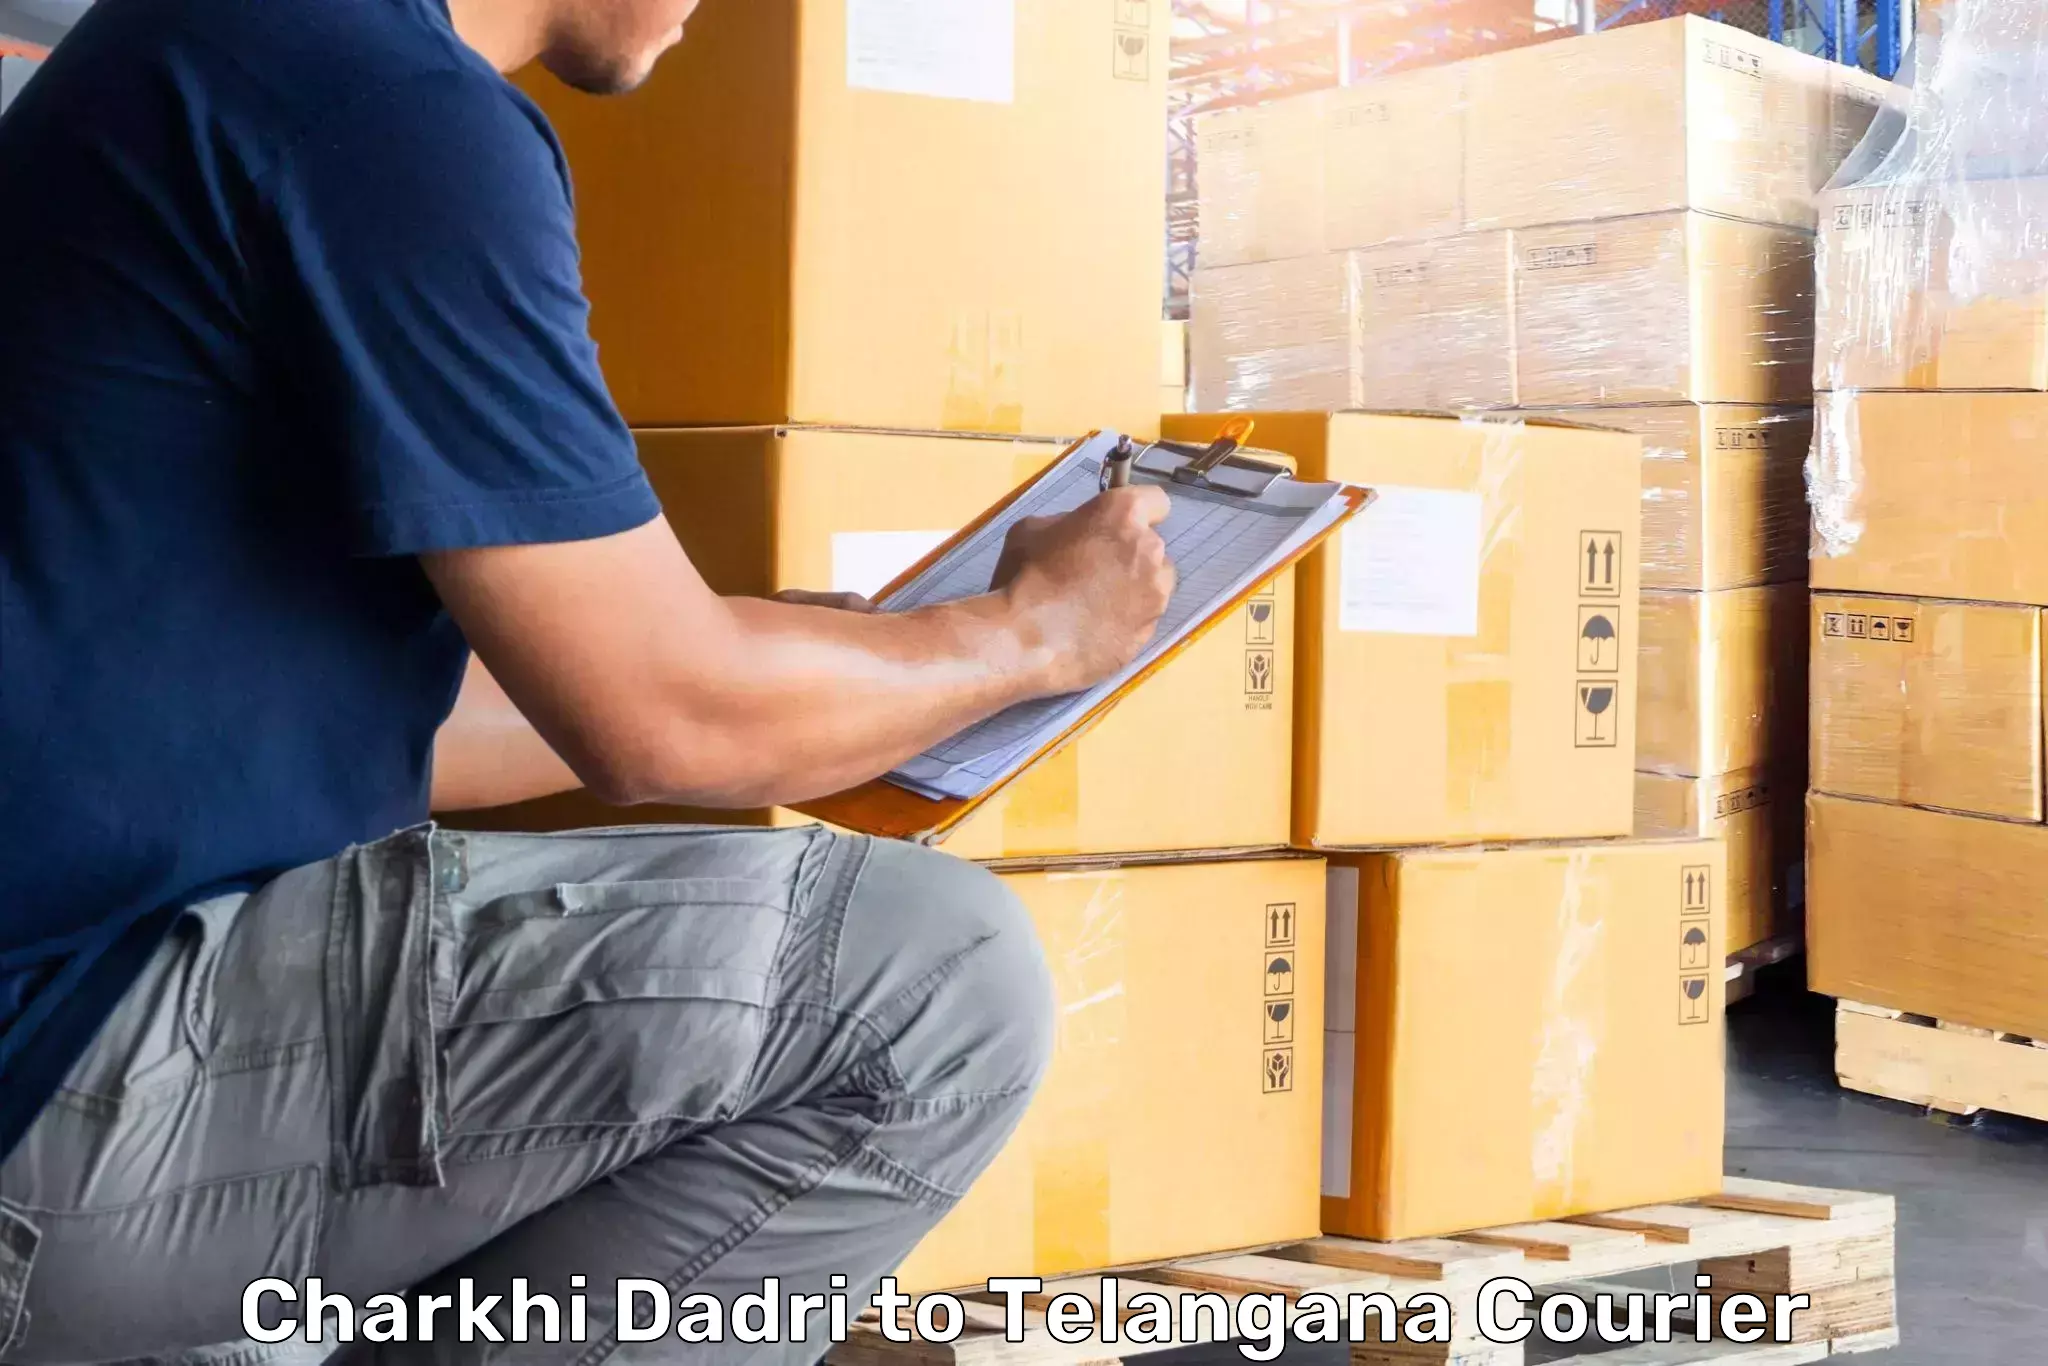 Luggage shipment tracking Charkhi Dadri to Cheyyur